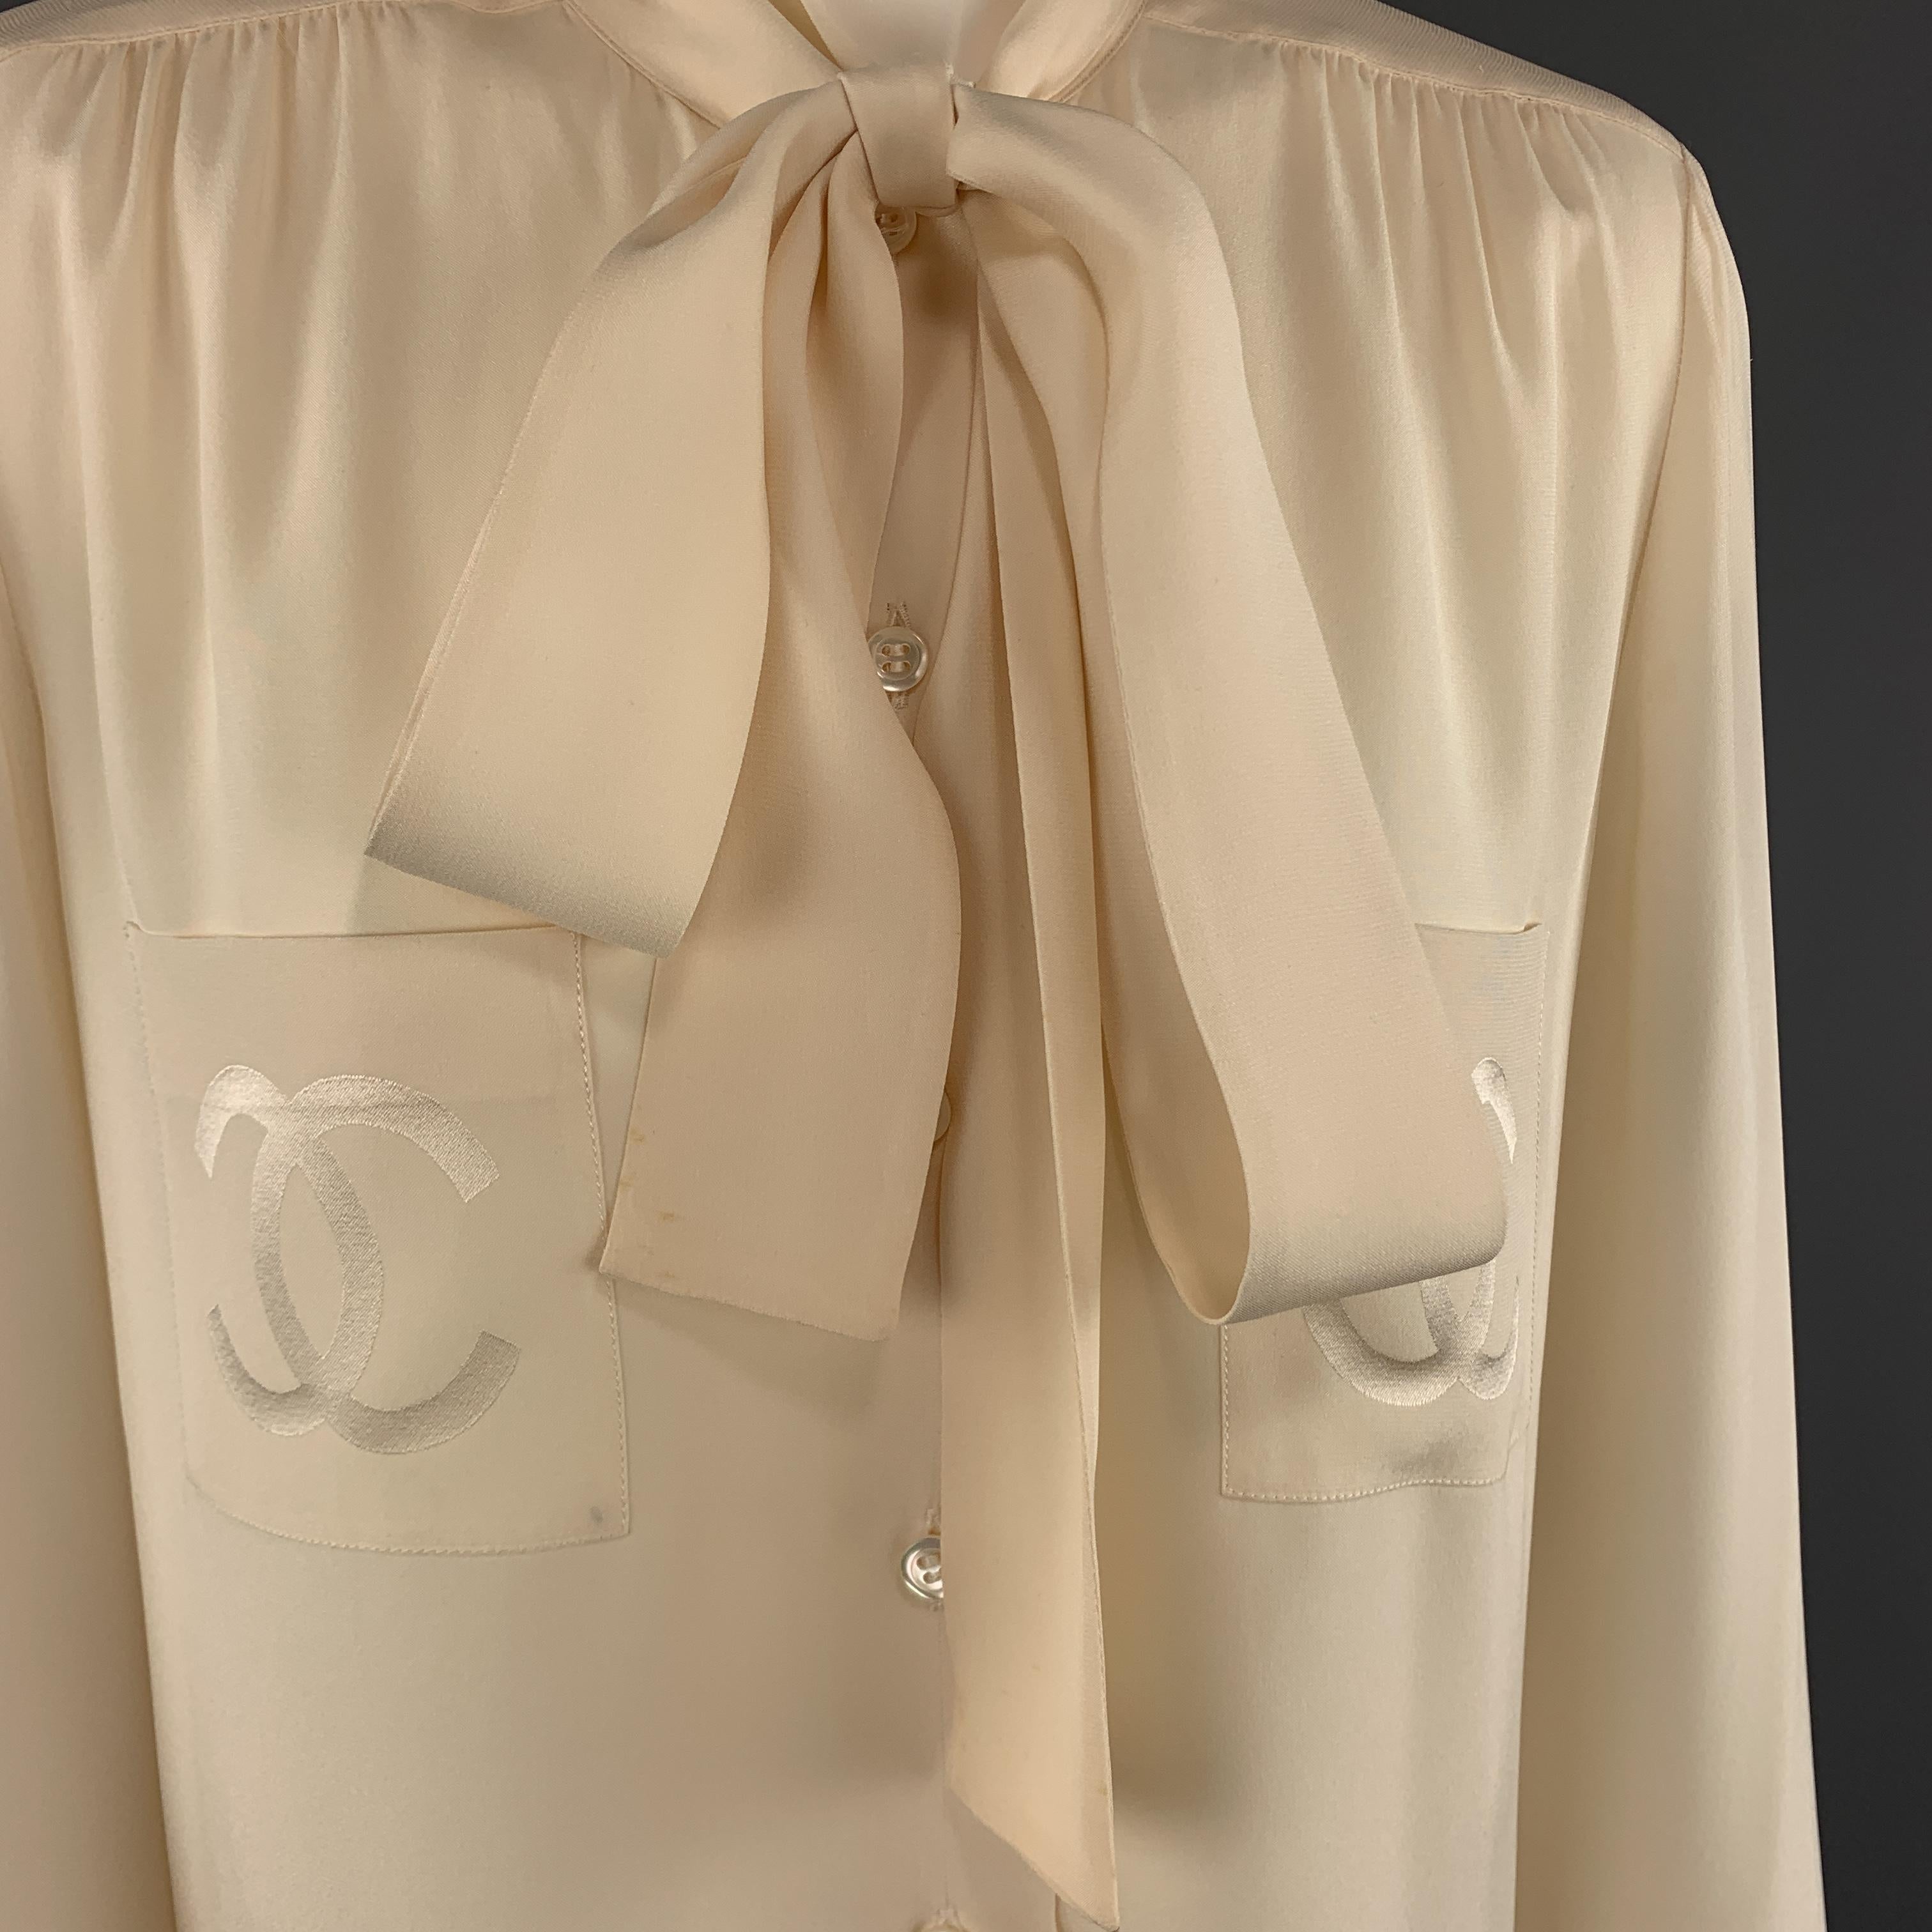 vintage chanel blouse